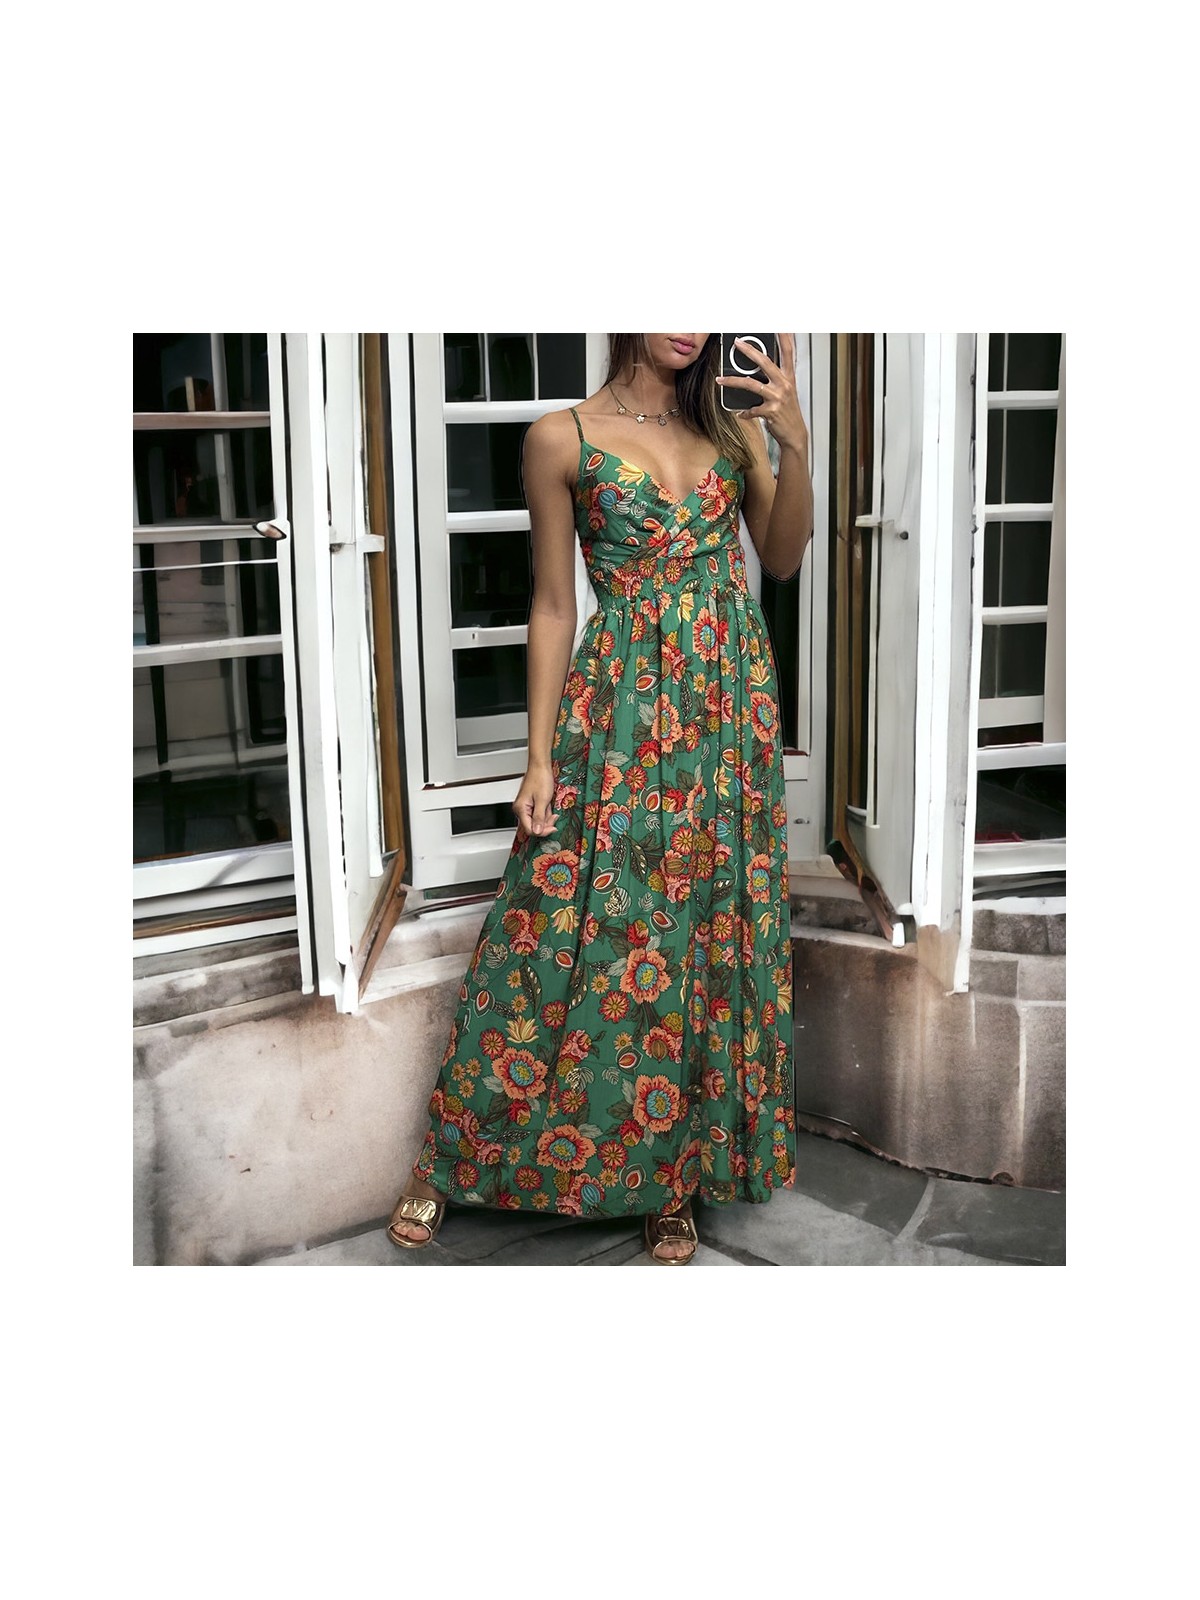 Longue robe avec motif fleuris verte bretelles amovible - 2